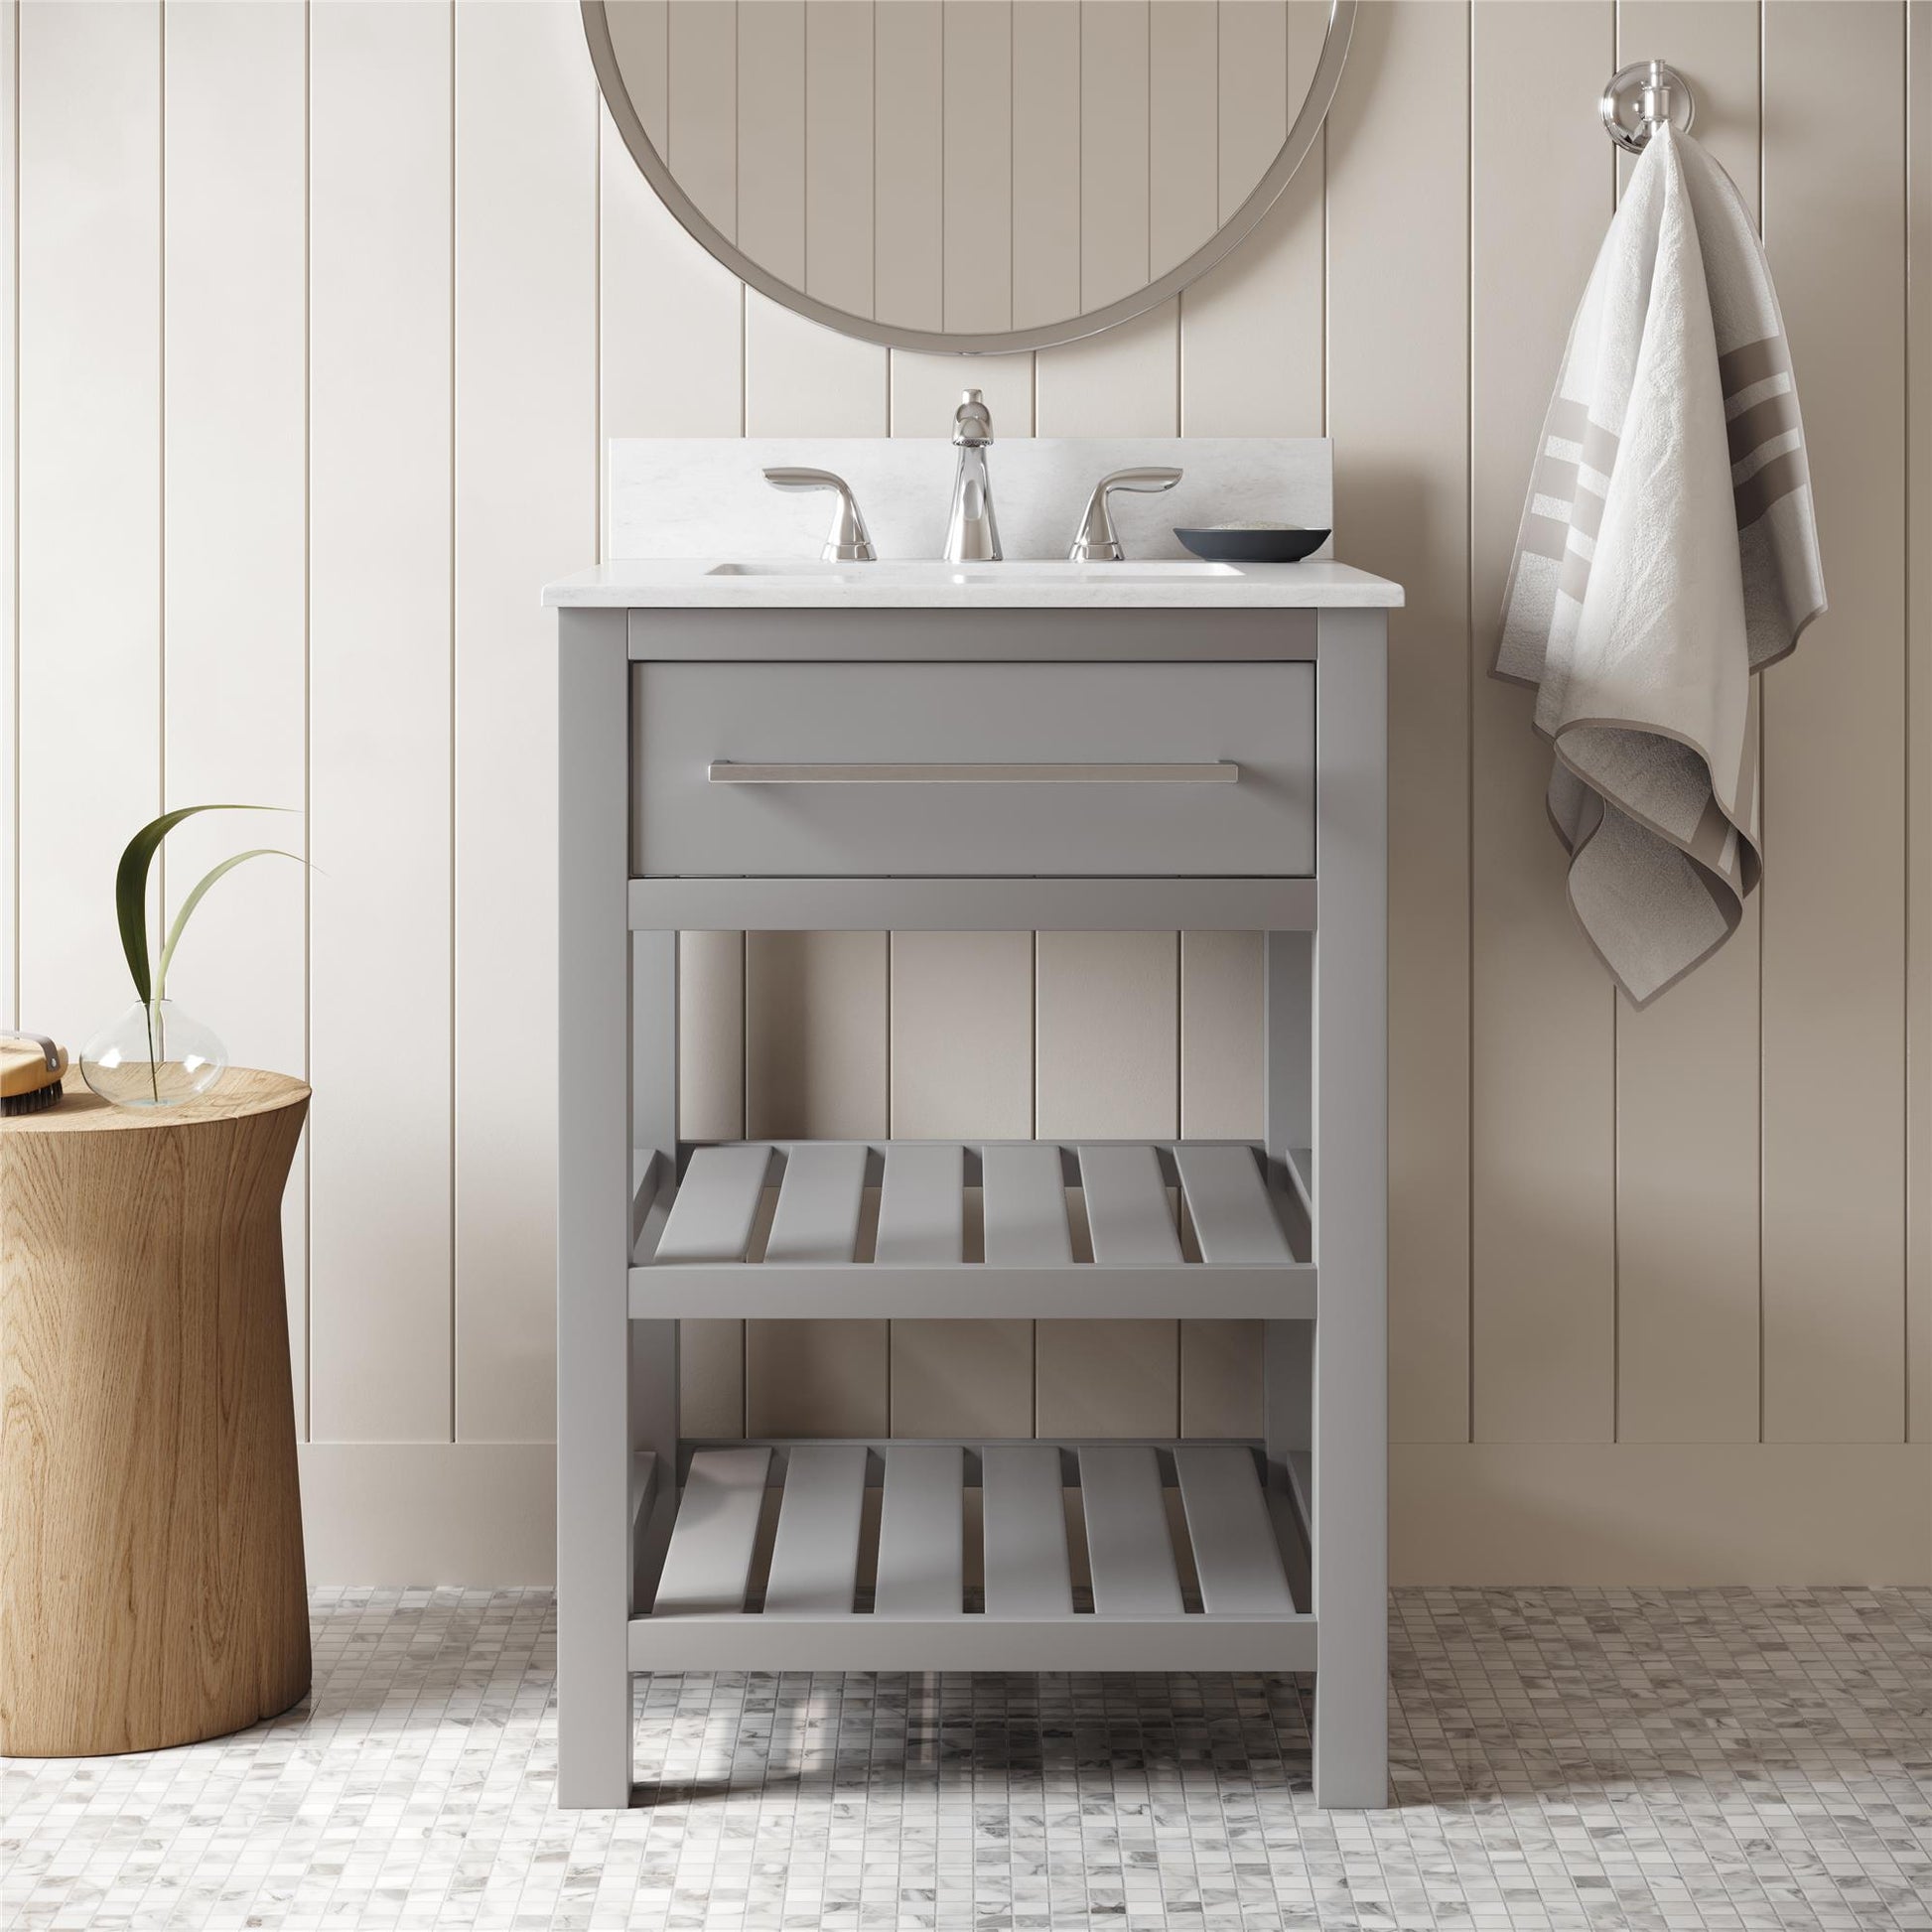 Camden Bathroom Vanity with Ceramic Sink and Metal Towel Rack - Gray - 24"